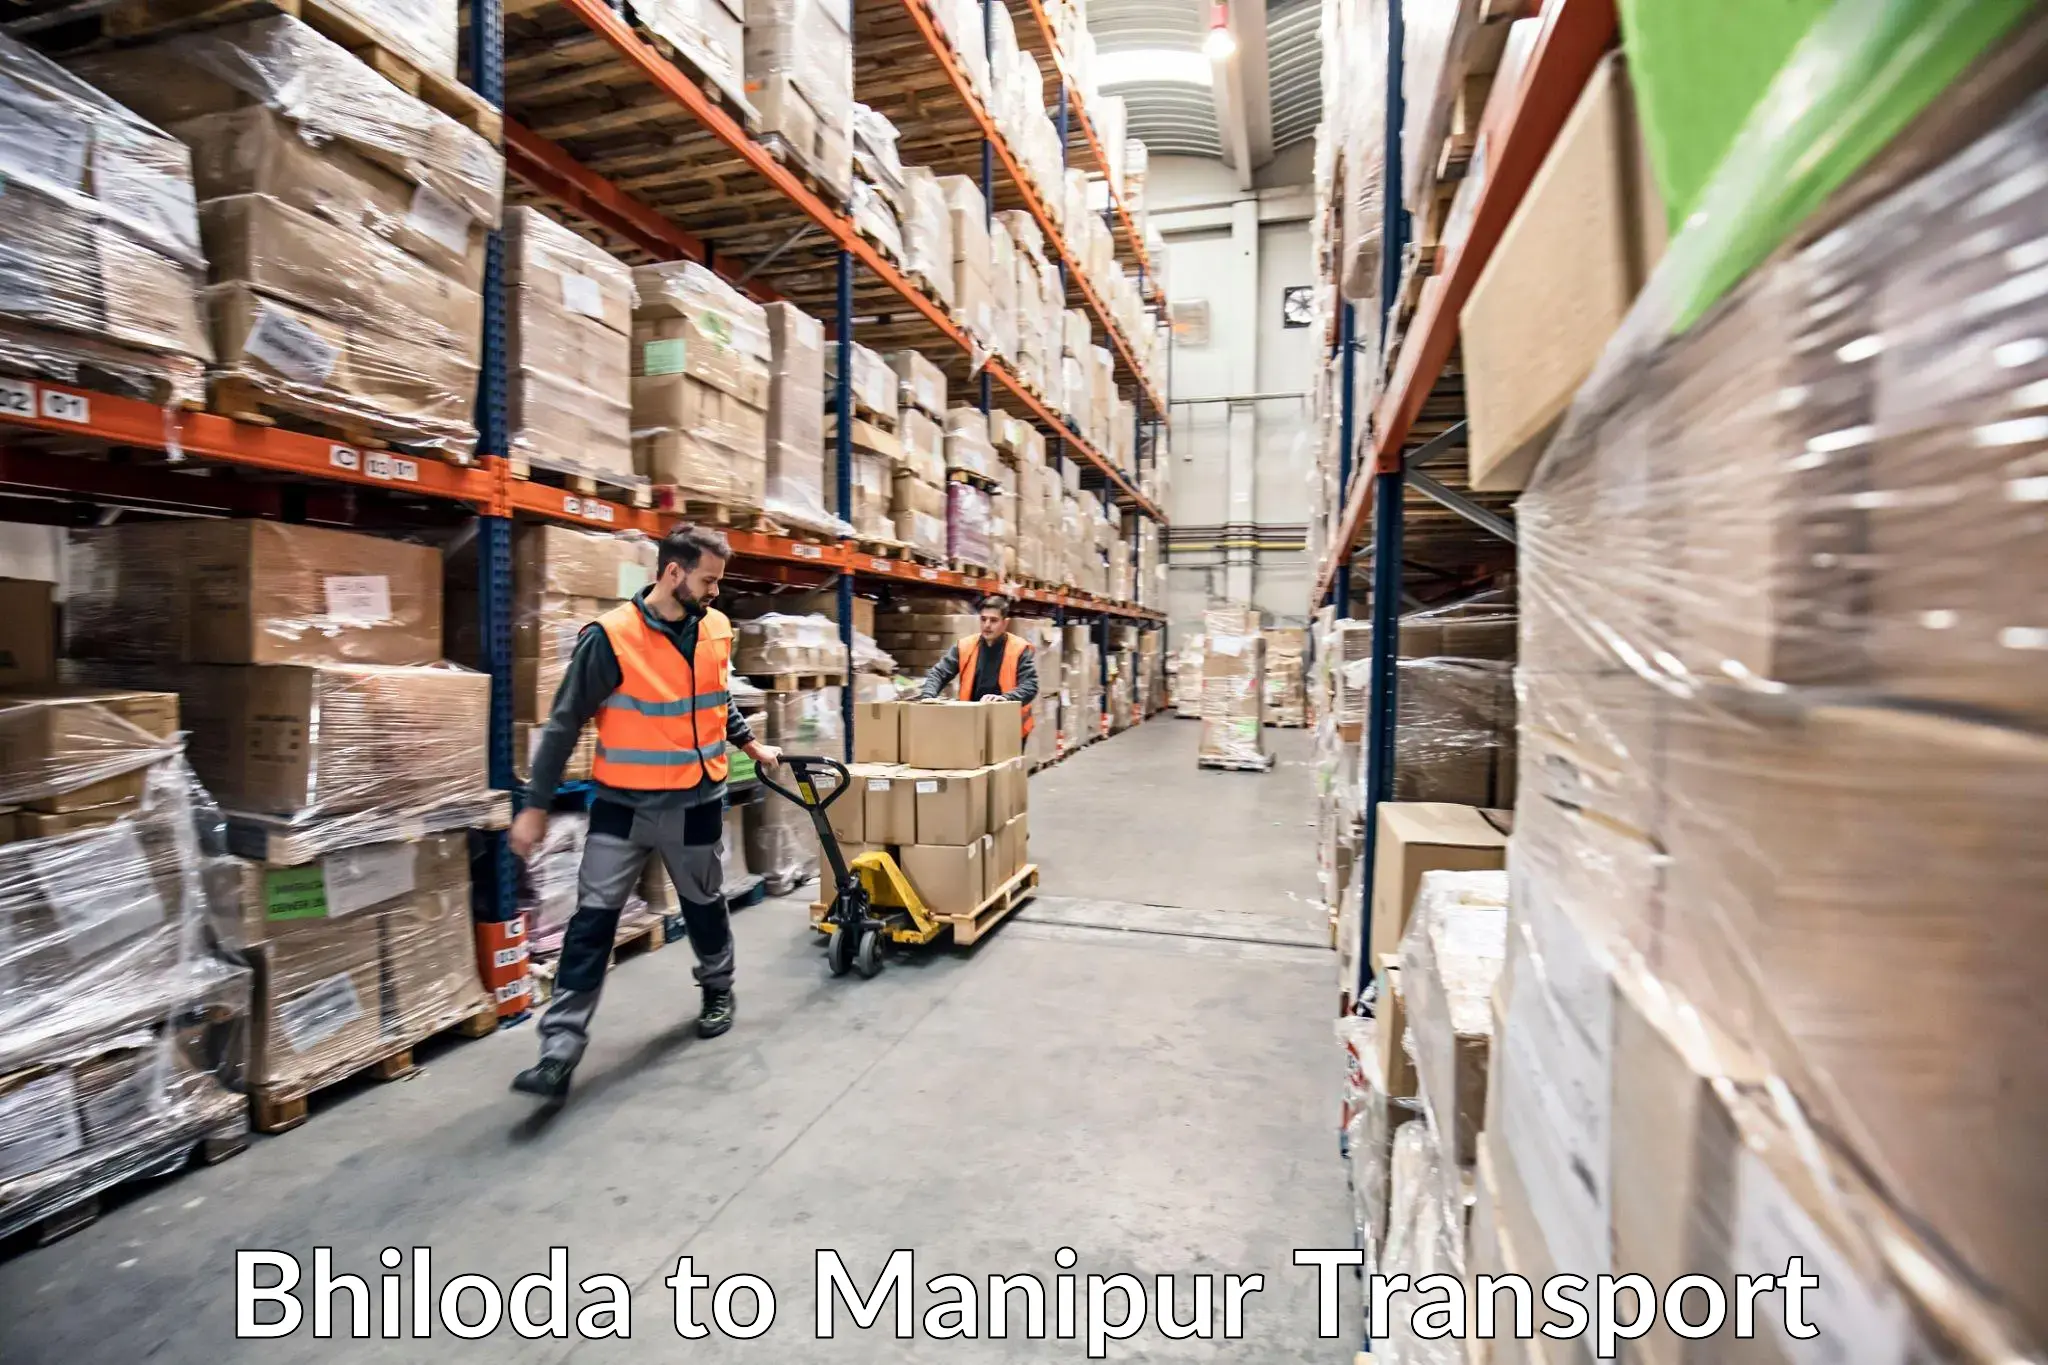 Truck transport companies in India Bhiloda to Senapati